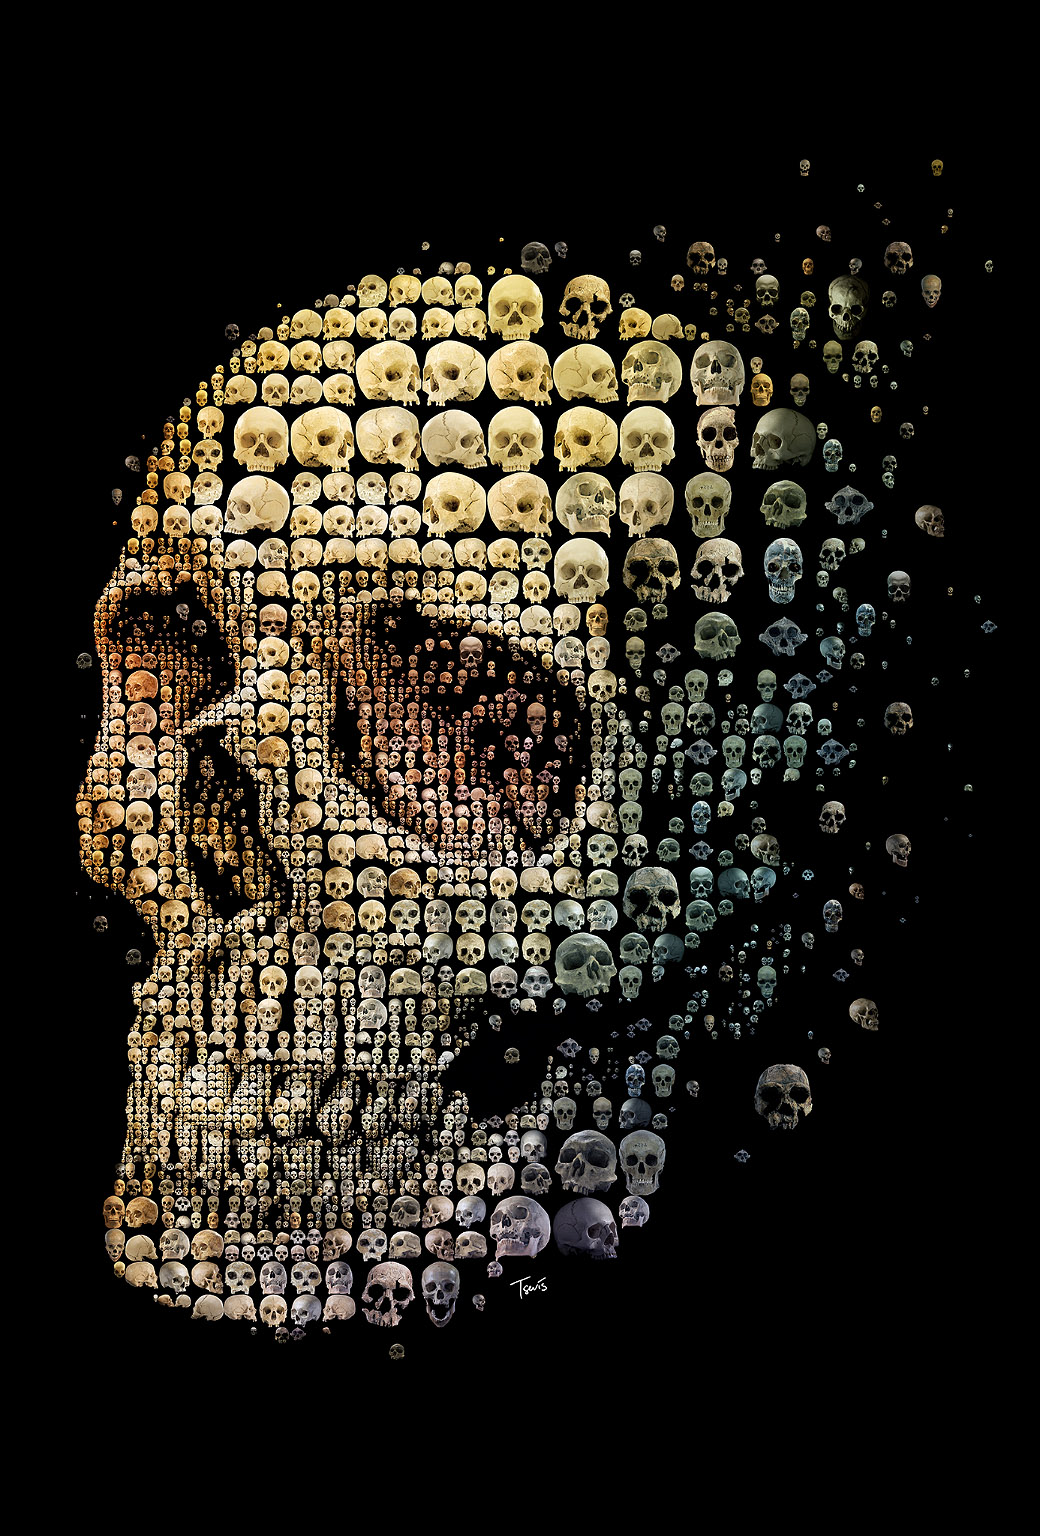 Skull Iphone Wallpaper - Cool Wallpaper For Ipad - HD Wallpaper 